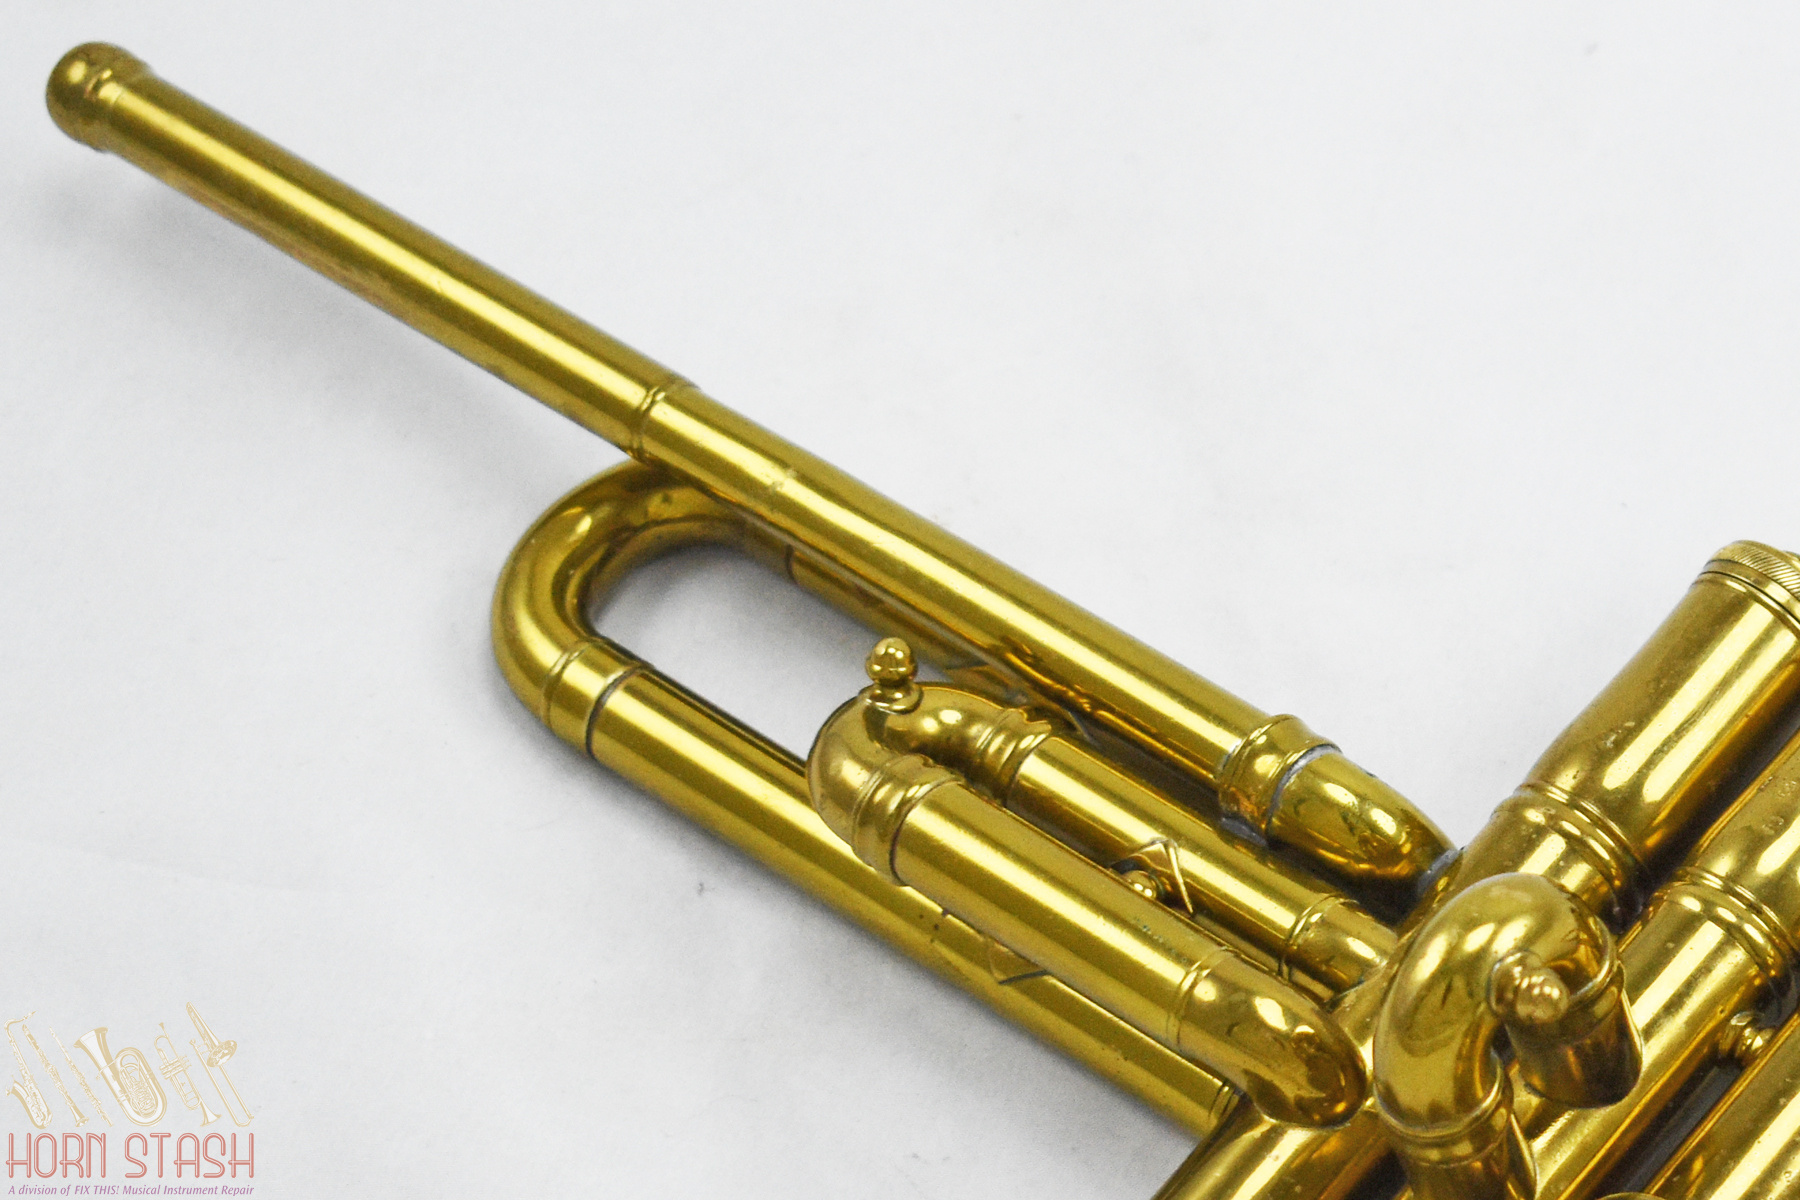 Lyon & Healy Used Lyon & Healy American Herald Trumpet - 13XX